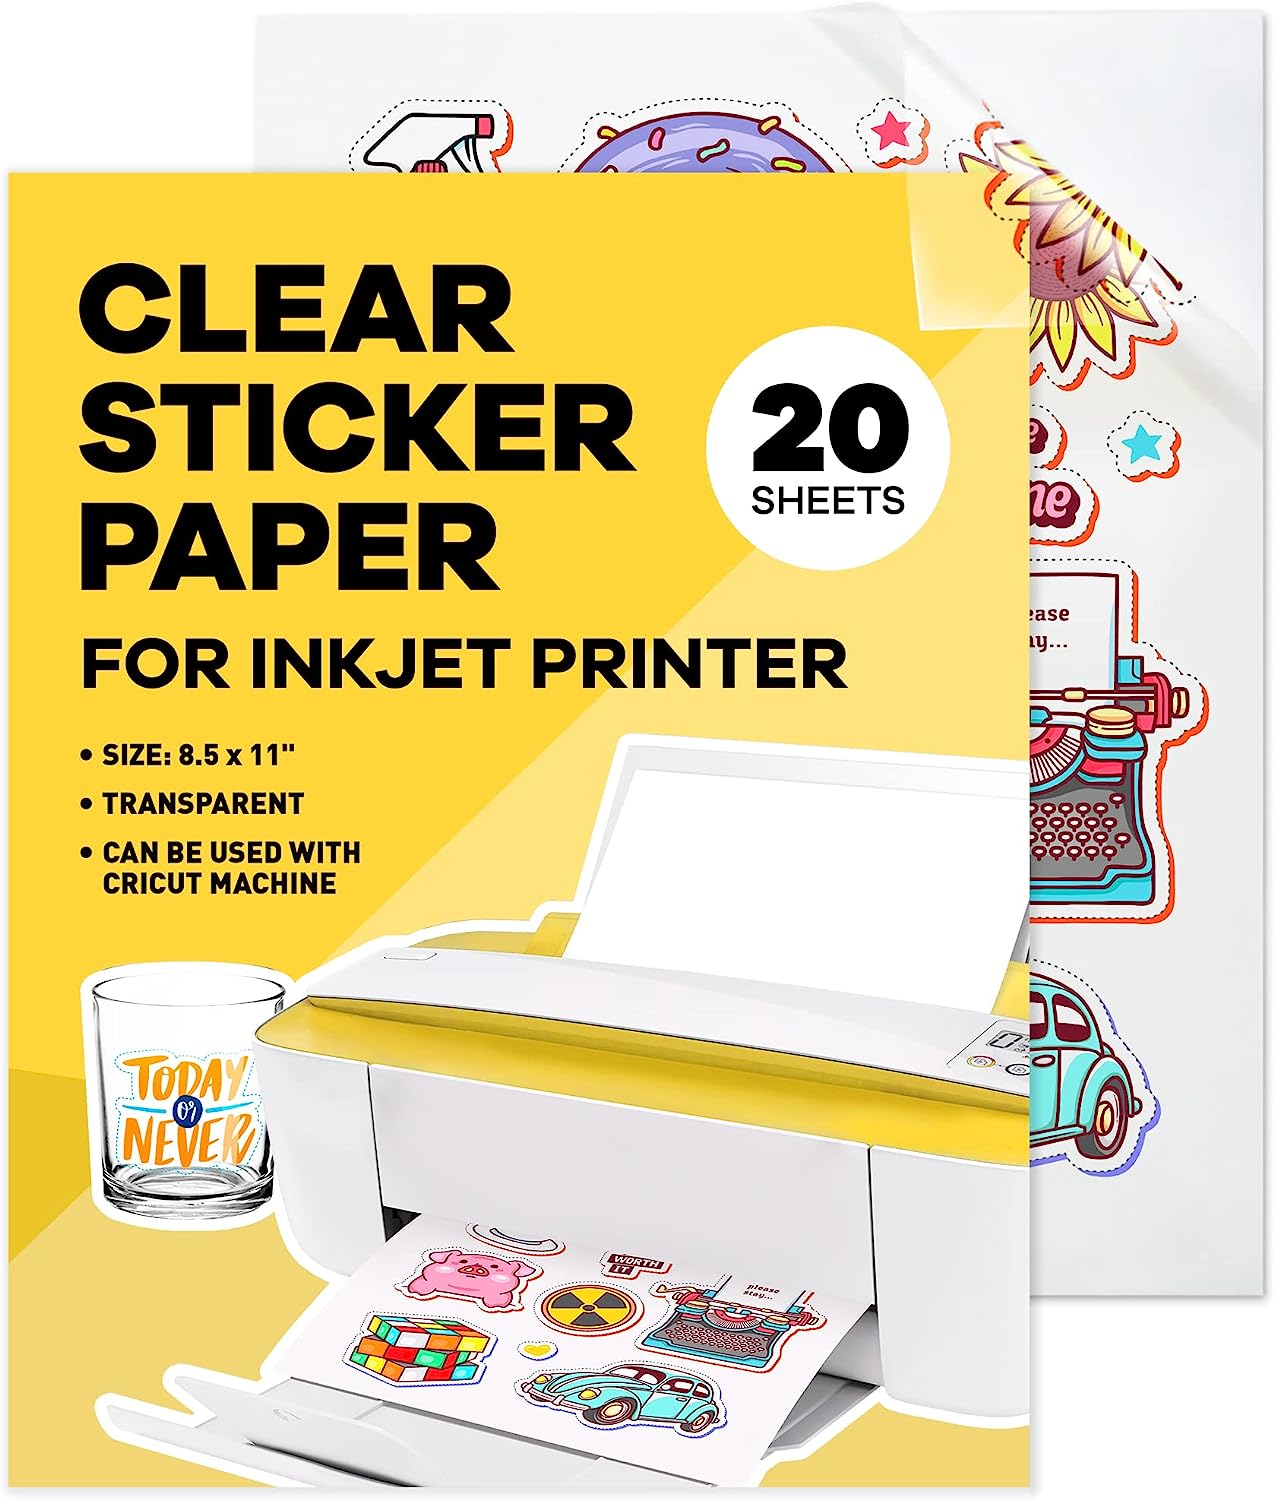 90% Clear Sticker Paper for Inkjet Printer (20 Sheets) [...]